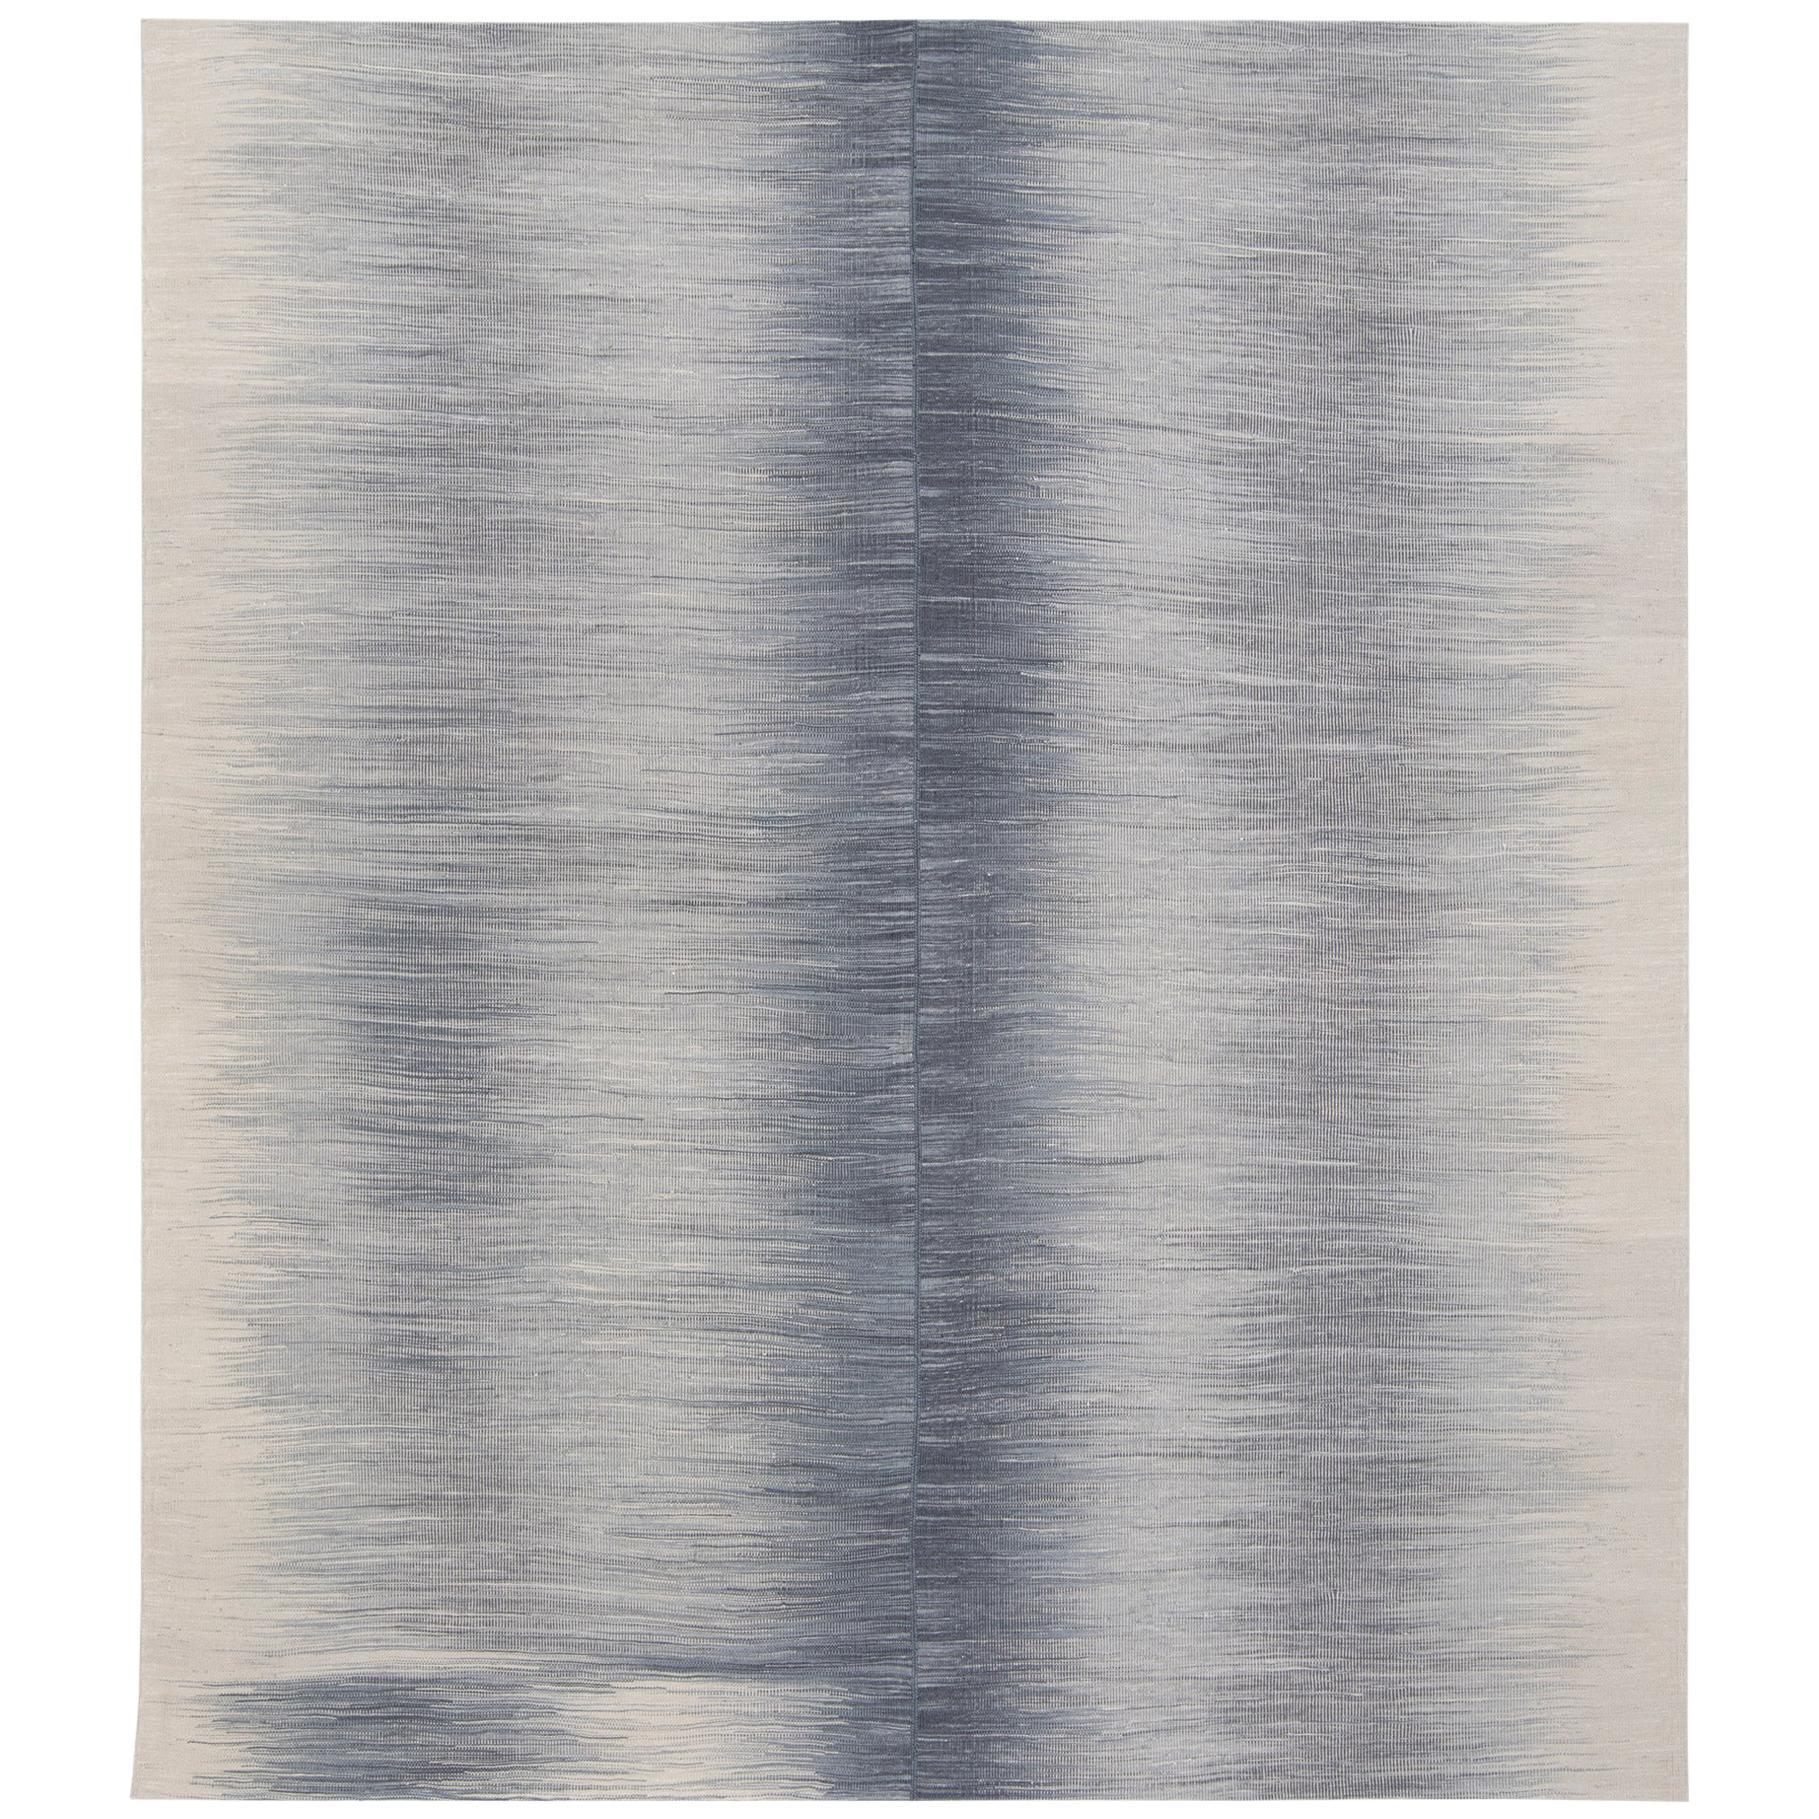 Mazandaran Handwoven Flat-Weave Rug in Blue Grey